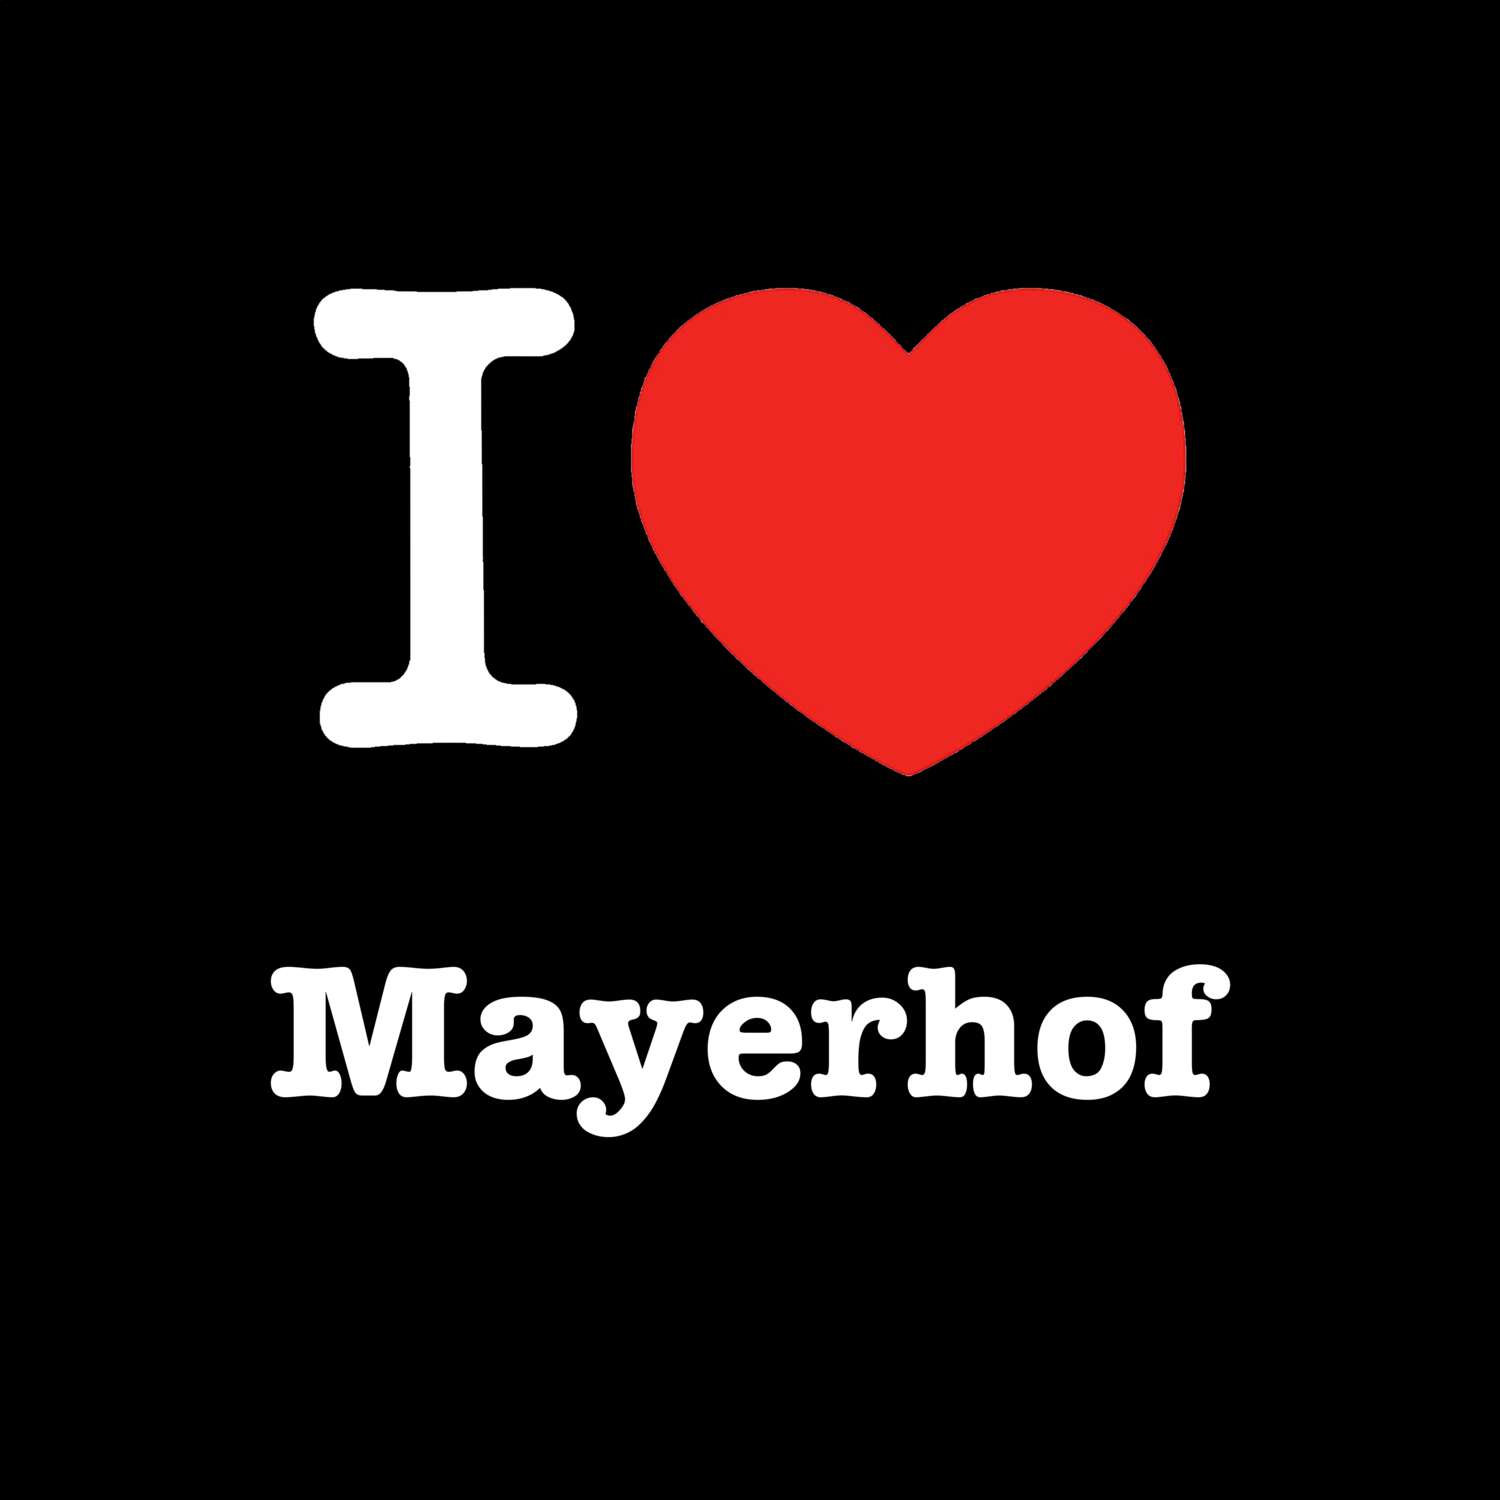 Mayerhof T-Shirt »I love«